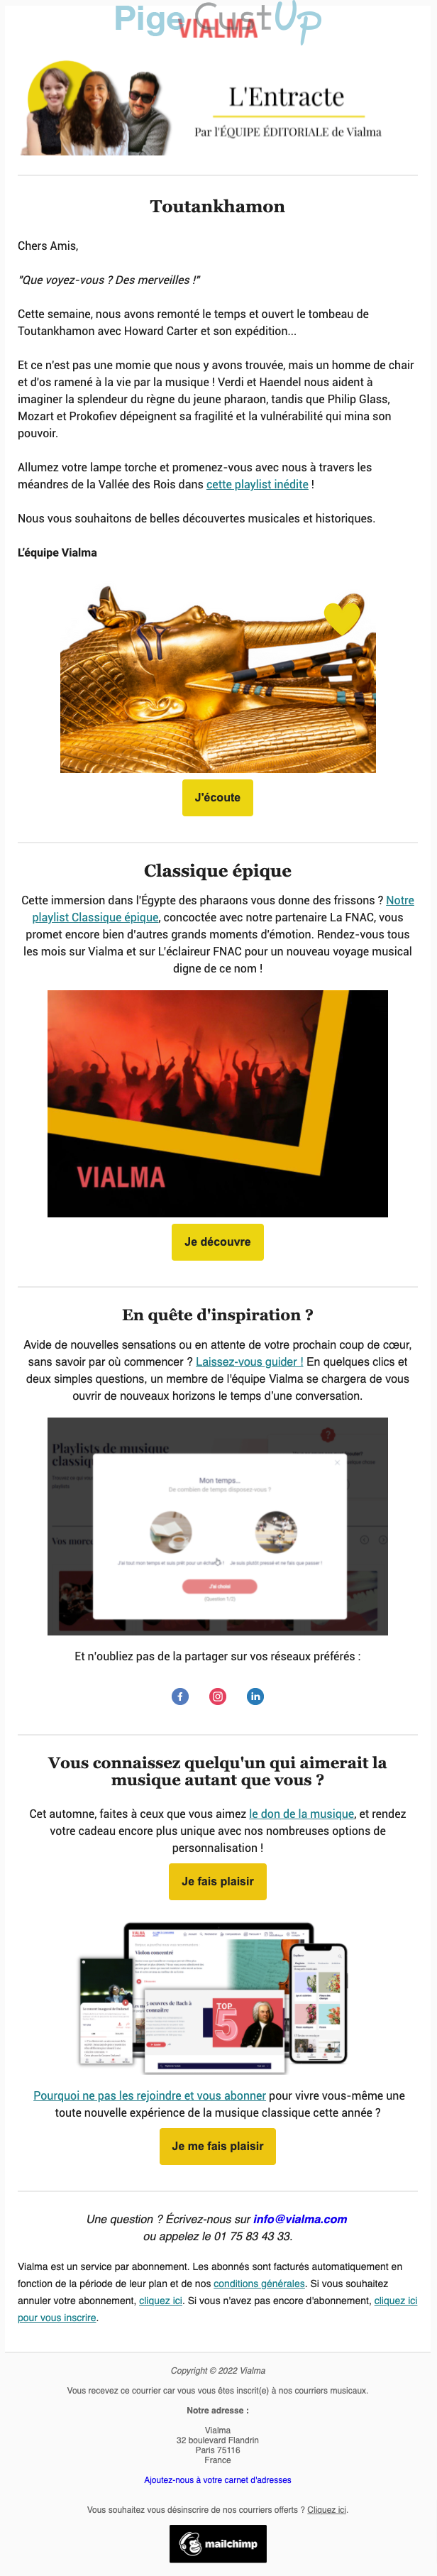 Exemple de Type de media  e-mailing - Vialma - Marketing relationnel - Newsletter